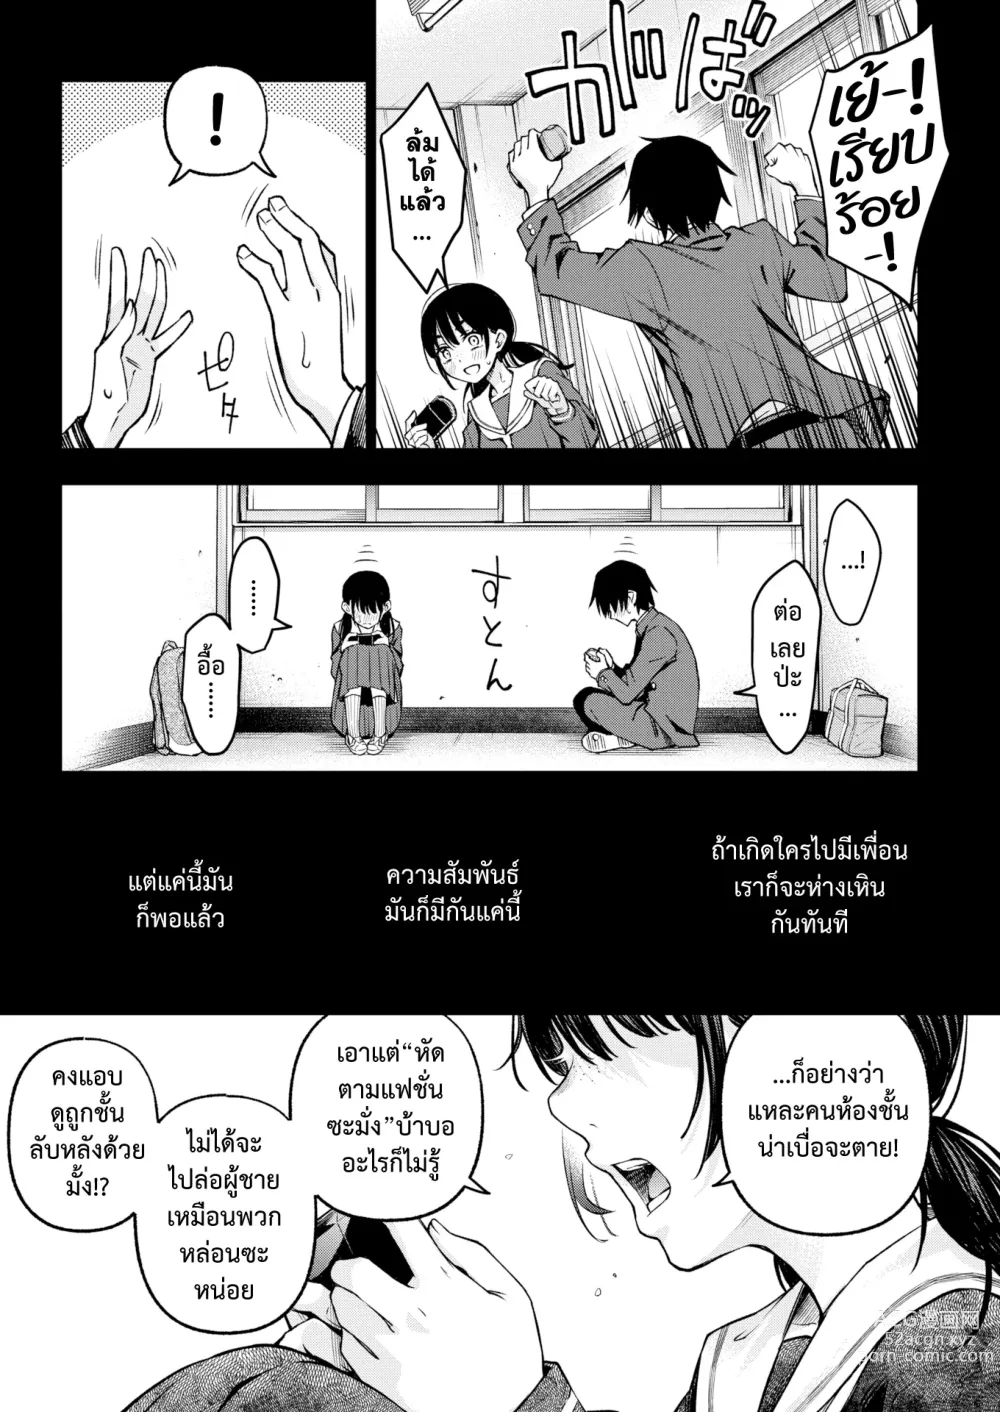 Page 7 of manga เพลงรักของคนหม่น